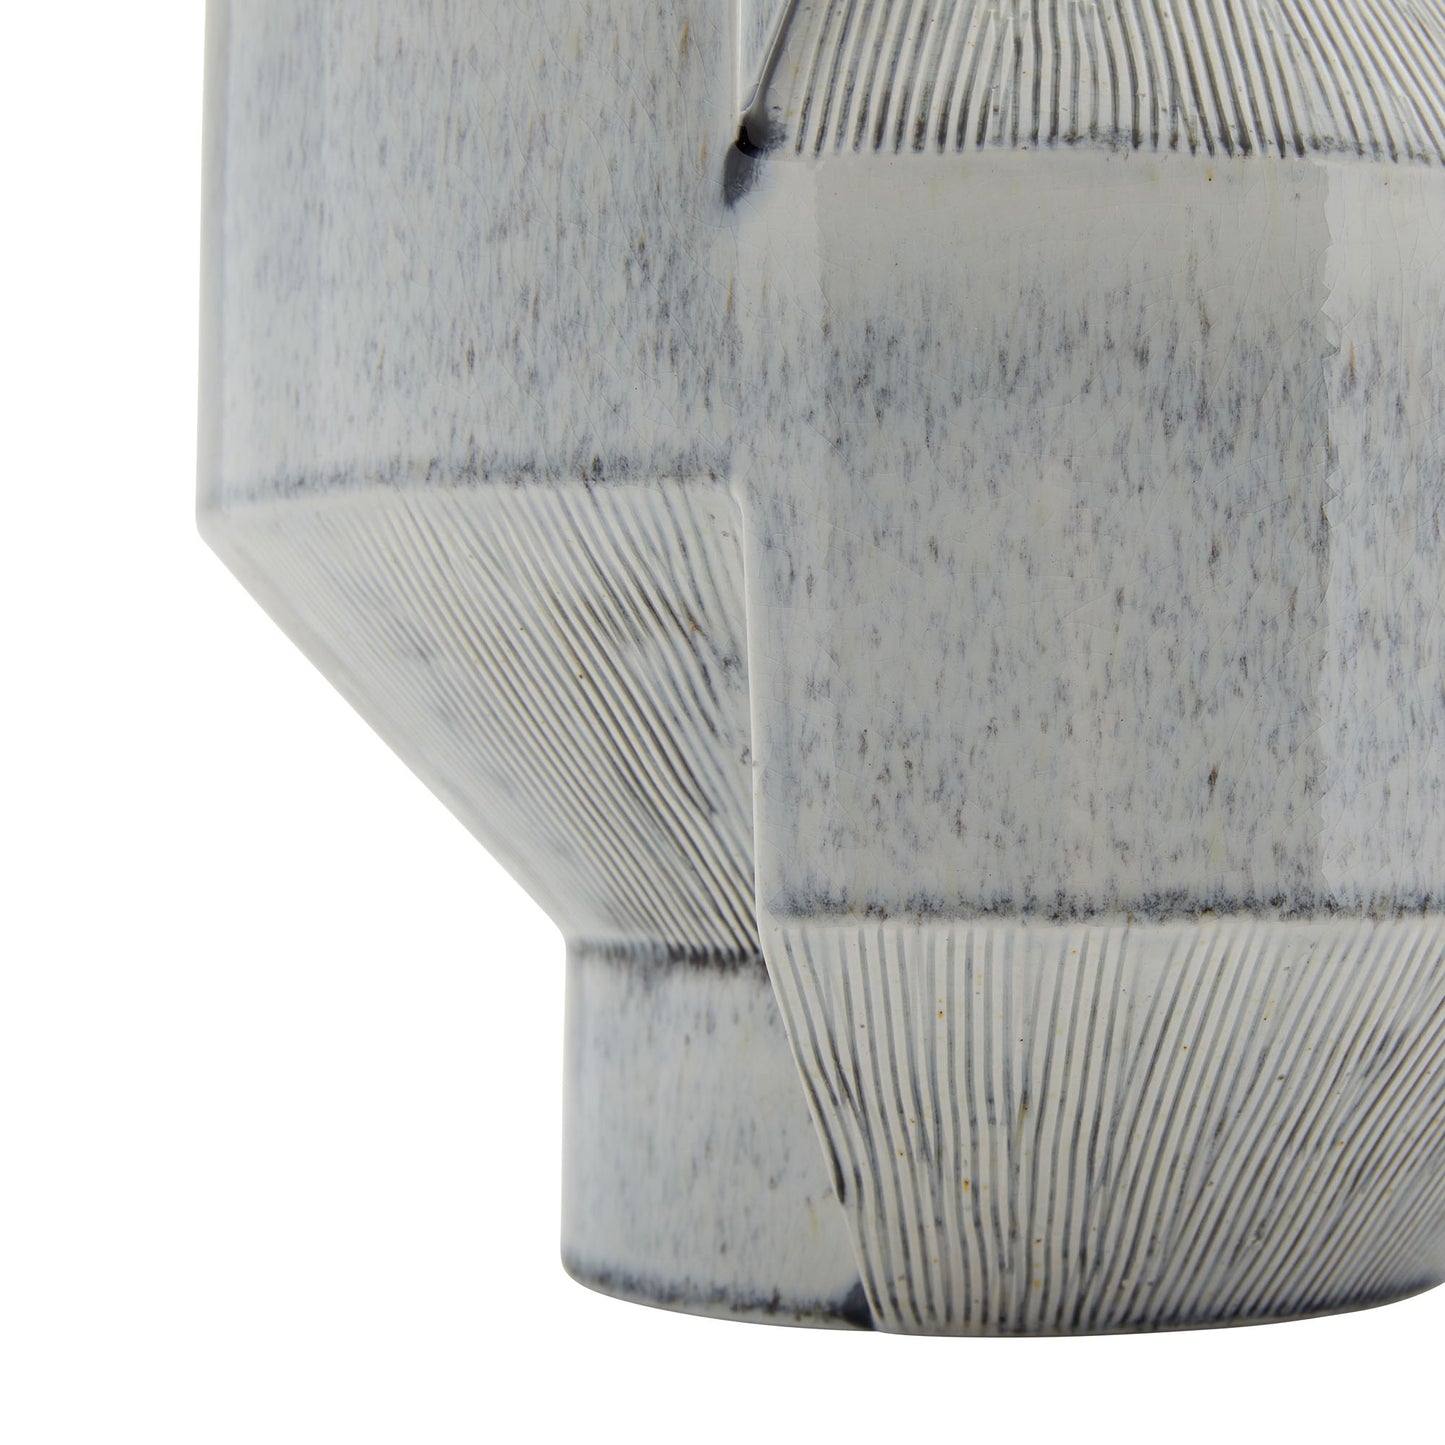 Marley Vase - Unique Porcelain Sculptural Design - Ice Reactive Glaze - Contemporary Home Decor